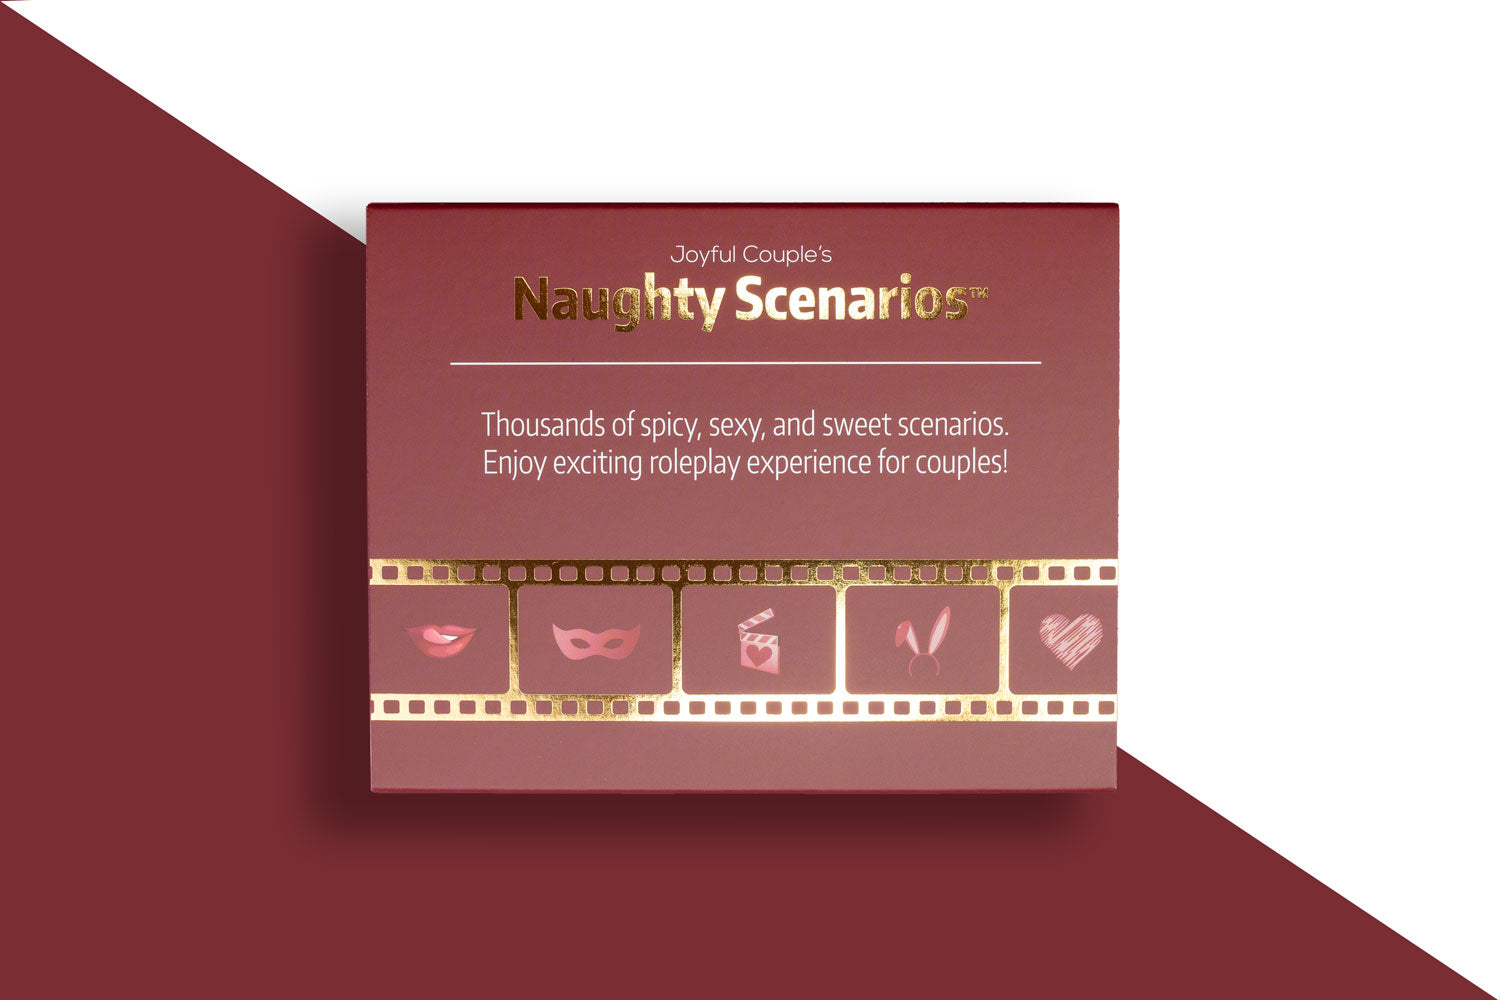  Joyful Couple's Naughty Scenarios: an Exciting Bedroom Game  with Role-Play Scenarios : Health & Household